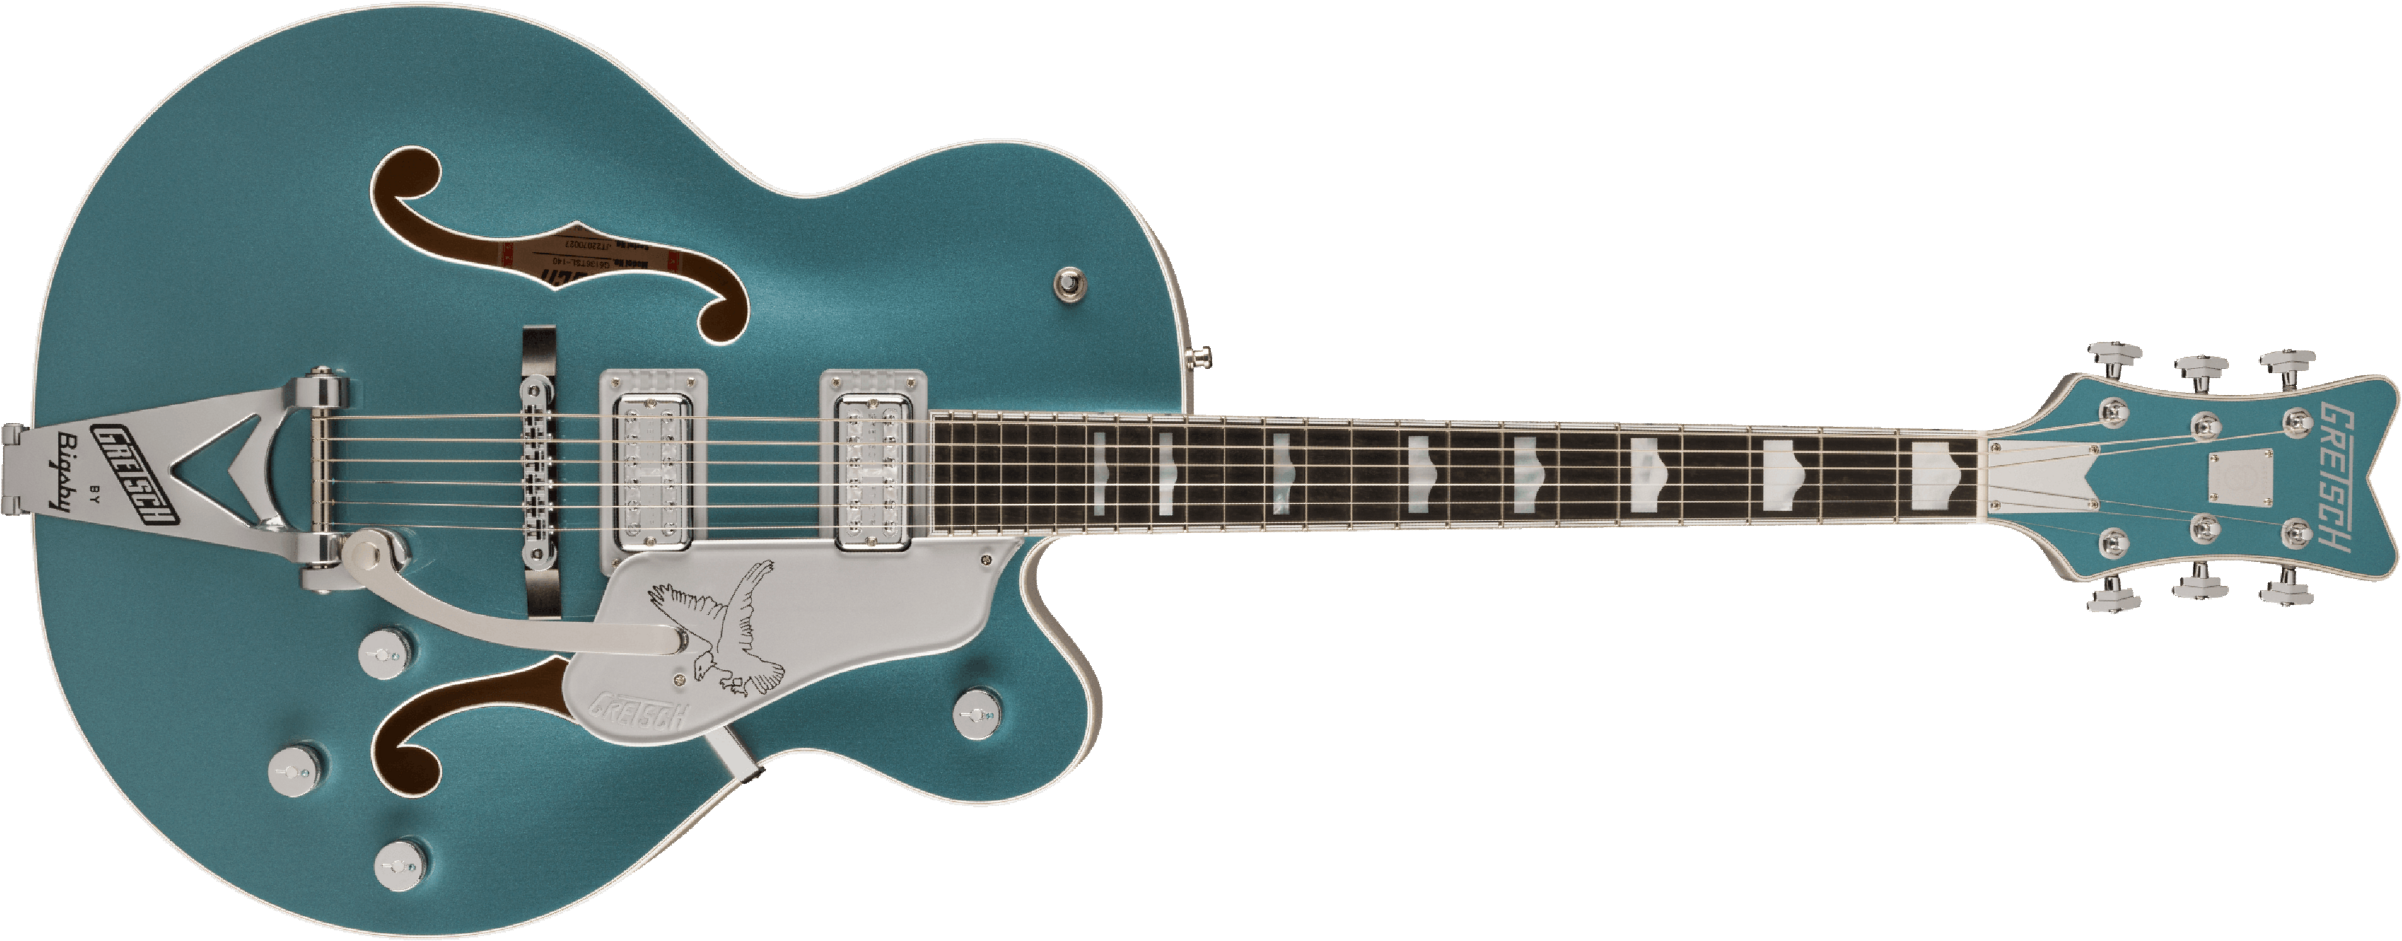 Gretsch G6136t-140 Ltd 140th Double-platinum Falcon Eb - Two-tone Stone Platinum/pure Platinum - Semi hollow elektriche gitaar - Main picture